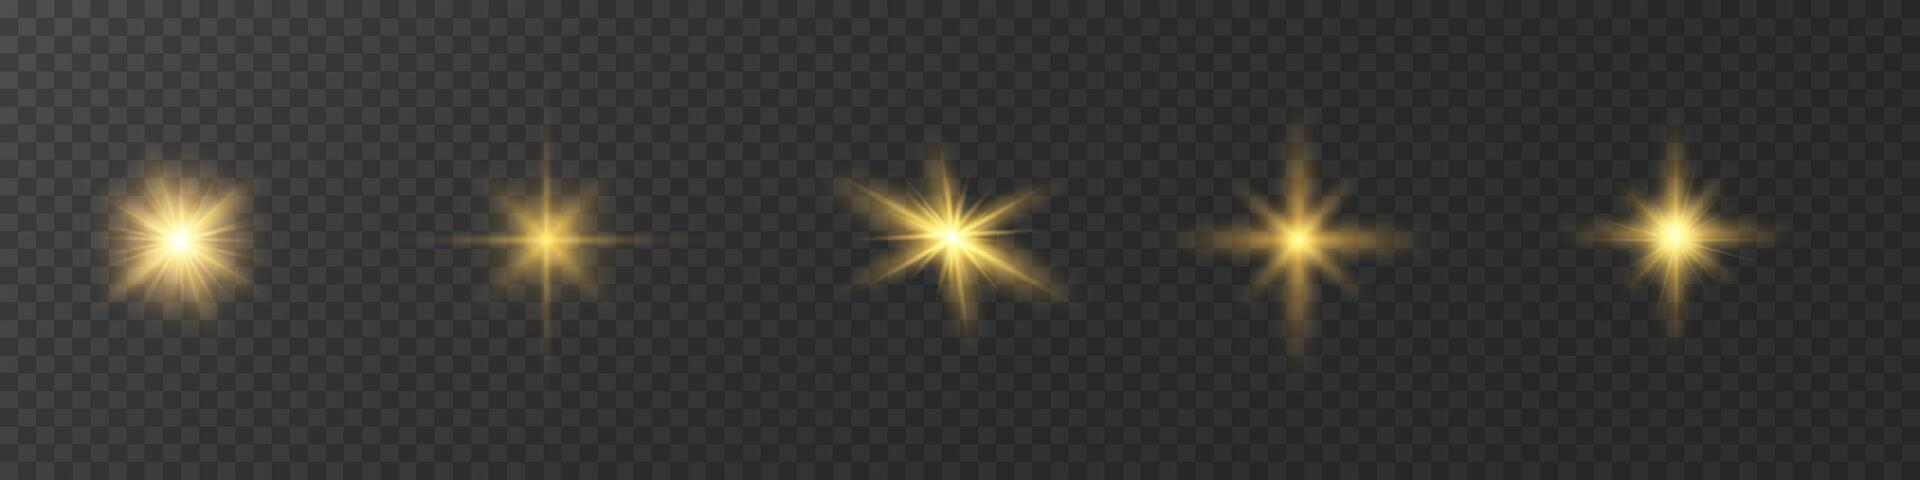 Star shine set. Golden light rays collection. vector